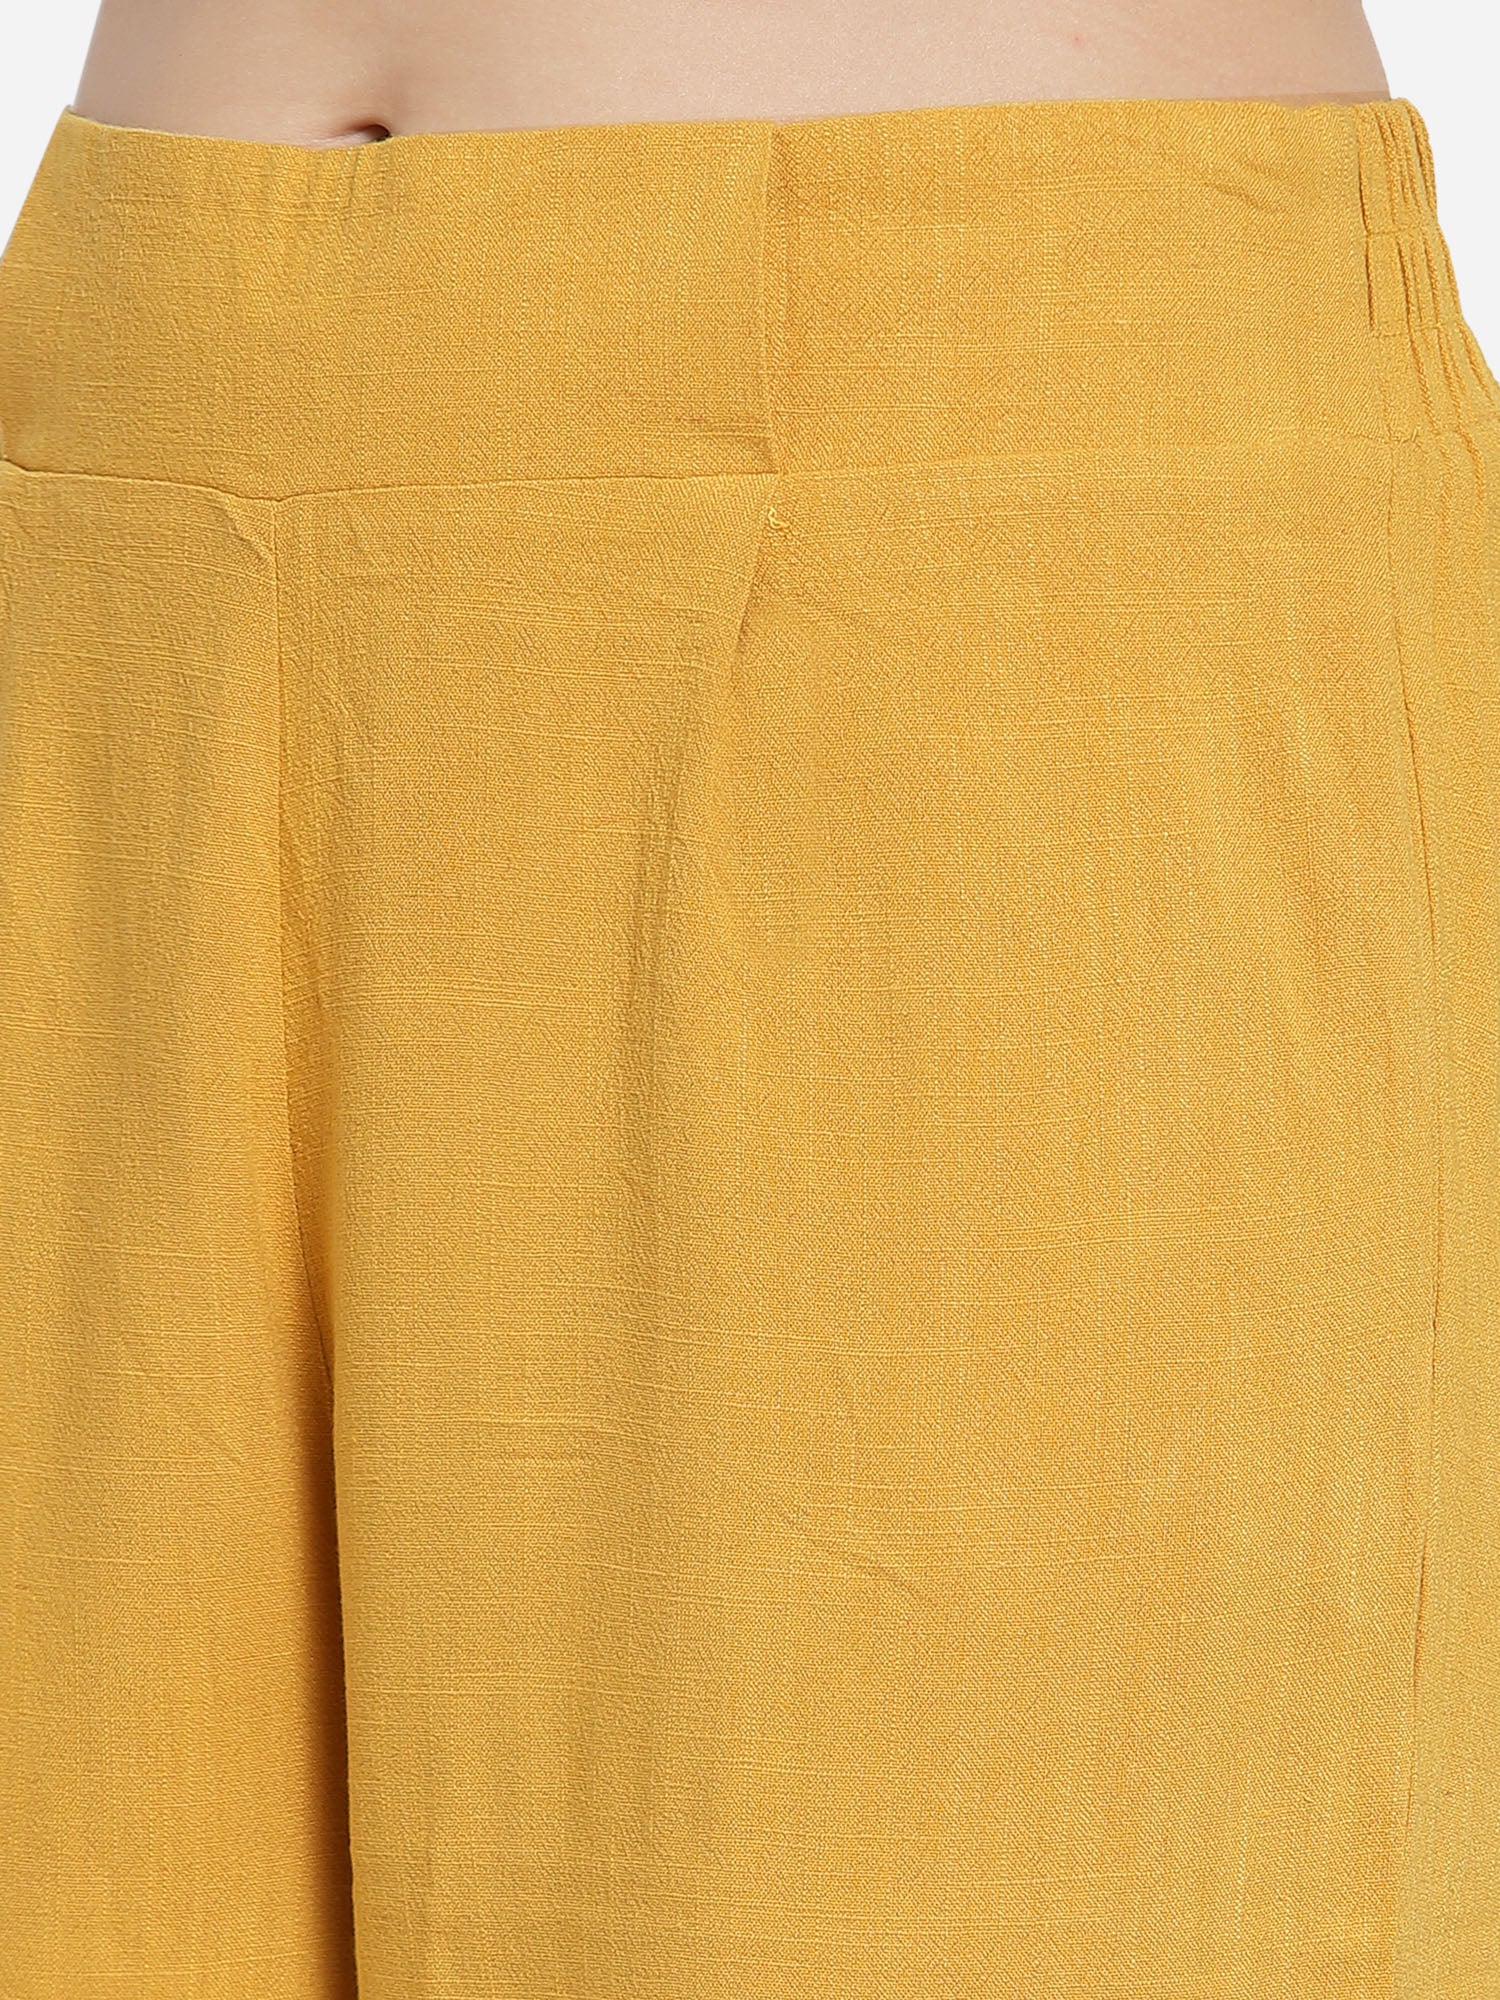 Gipsy Mustard Fashion Cotton Pant